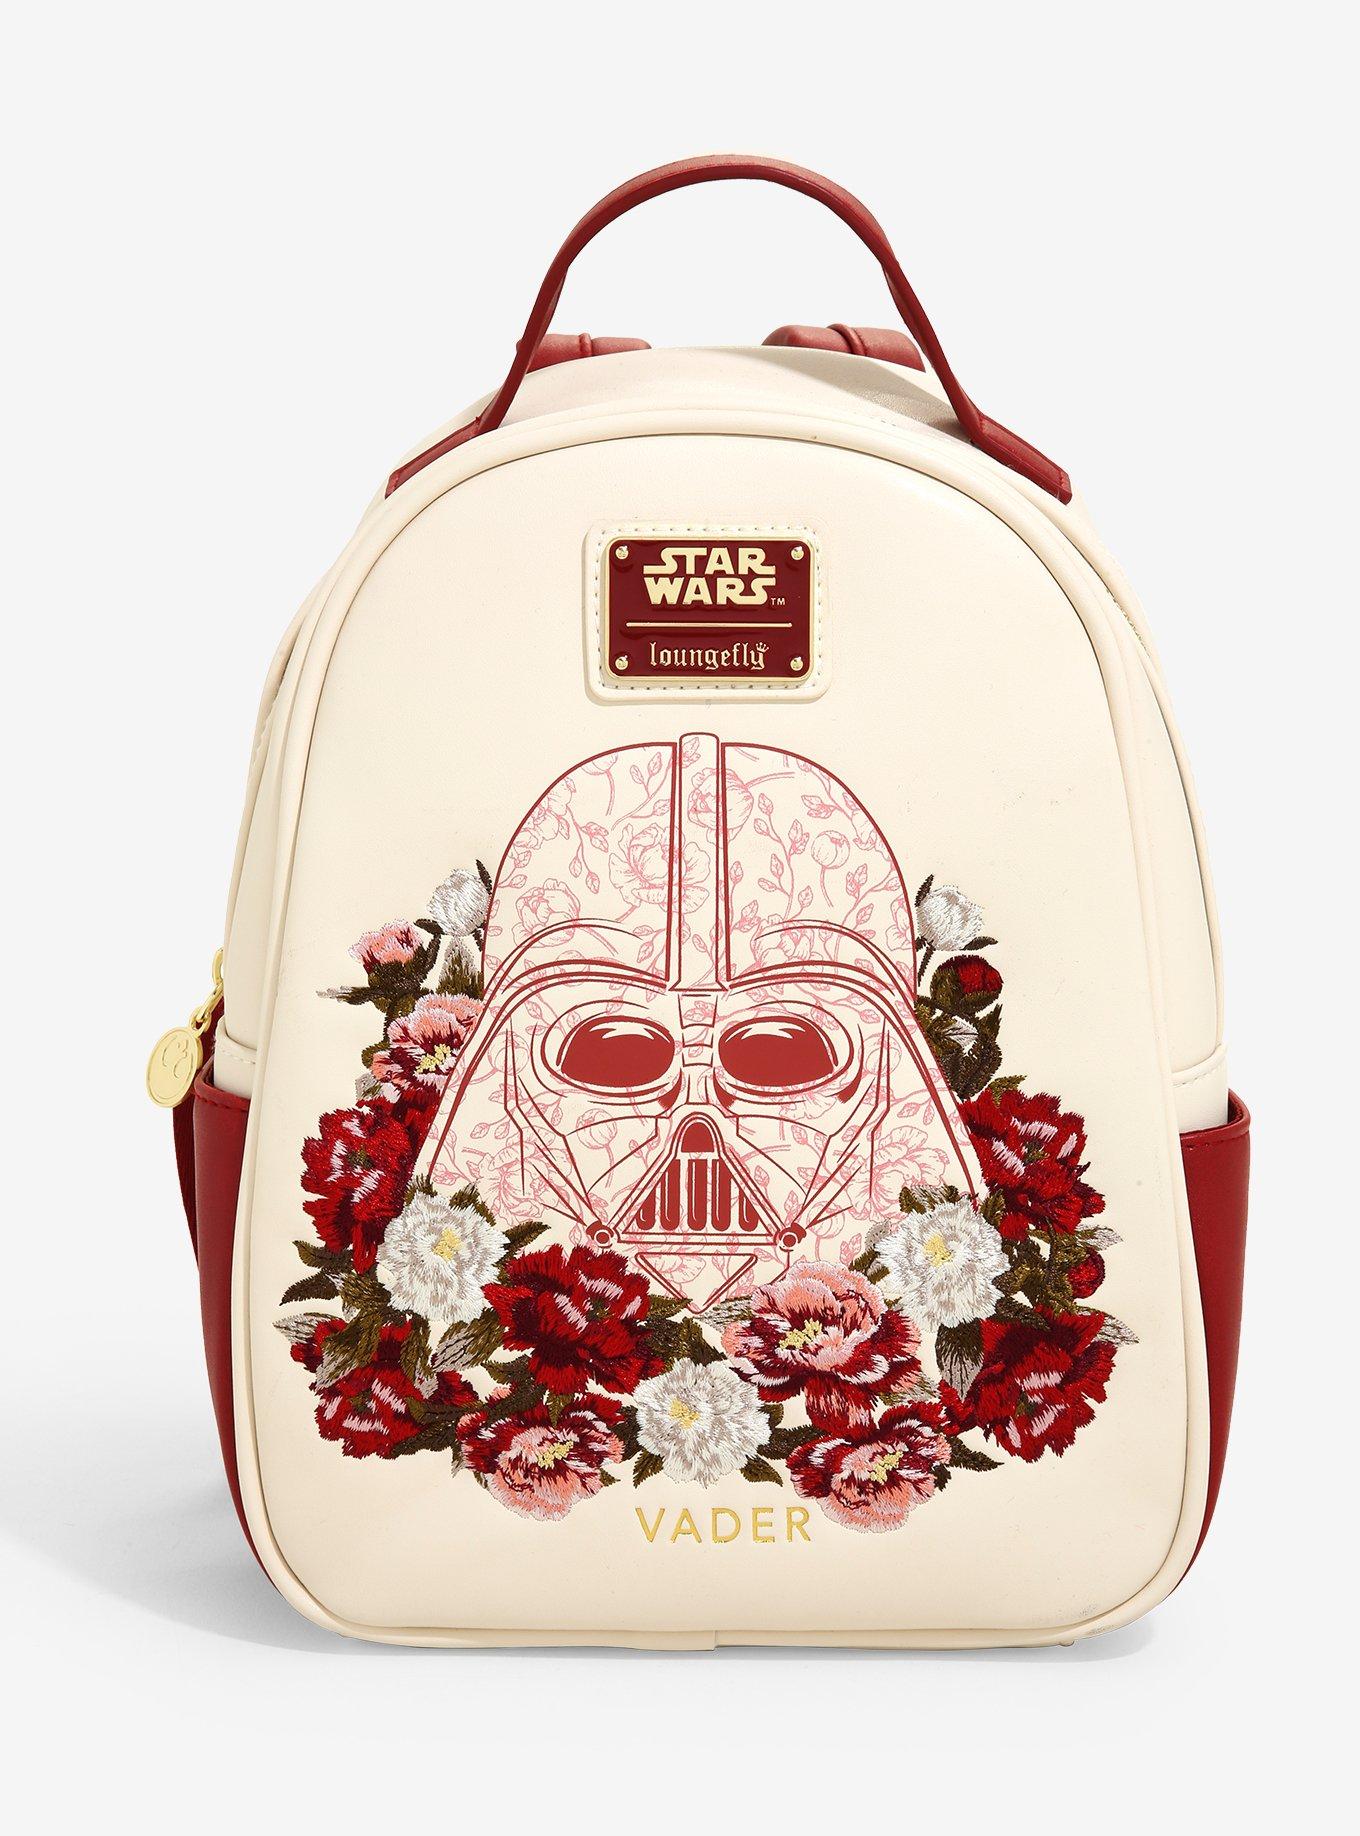 Funko POP! Star Wars Darth Vader Mini Backpack